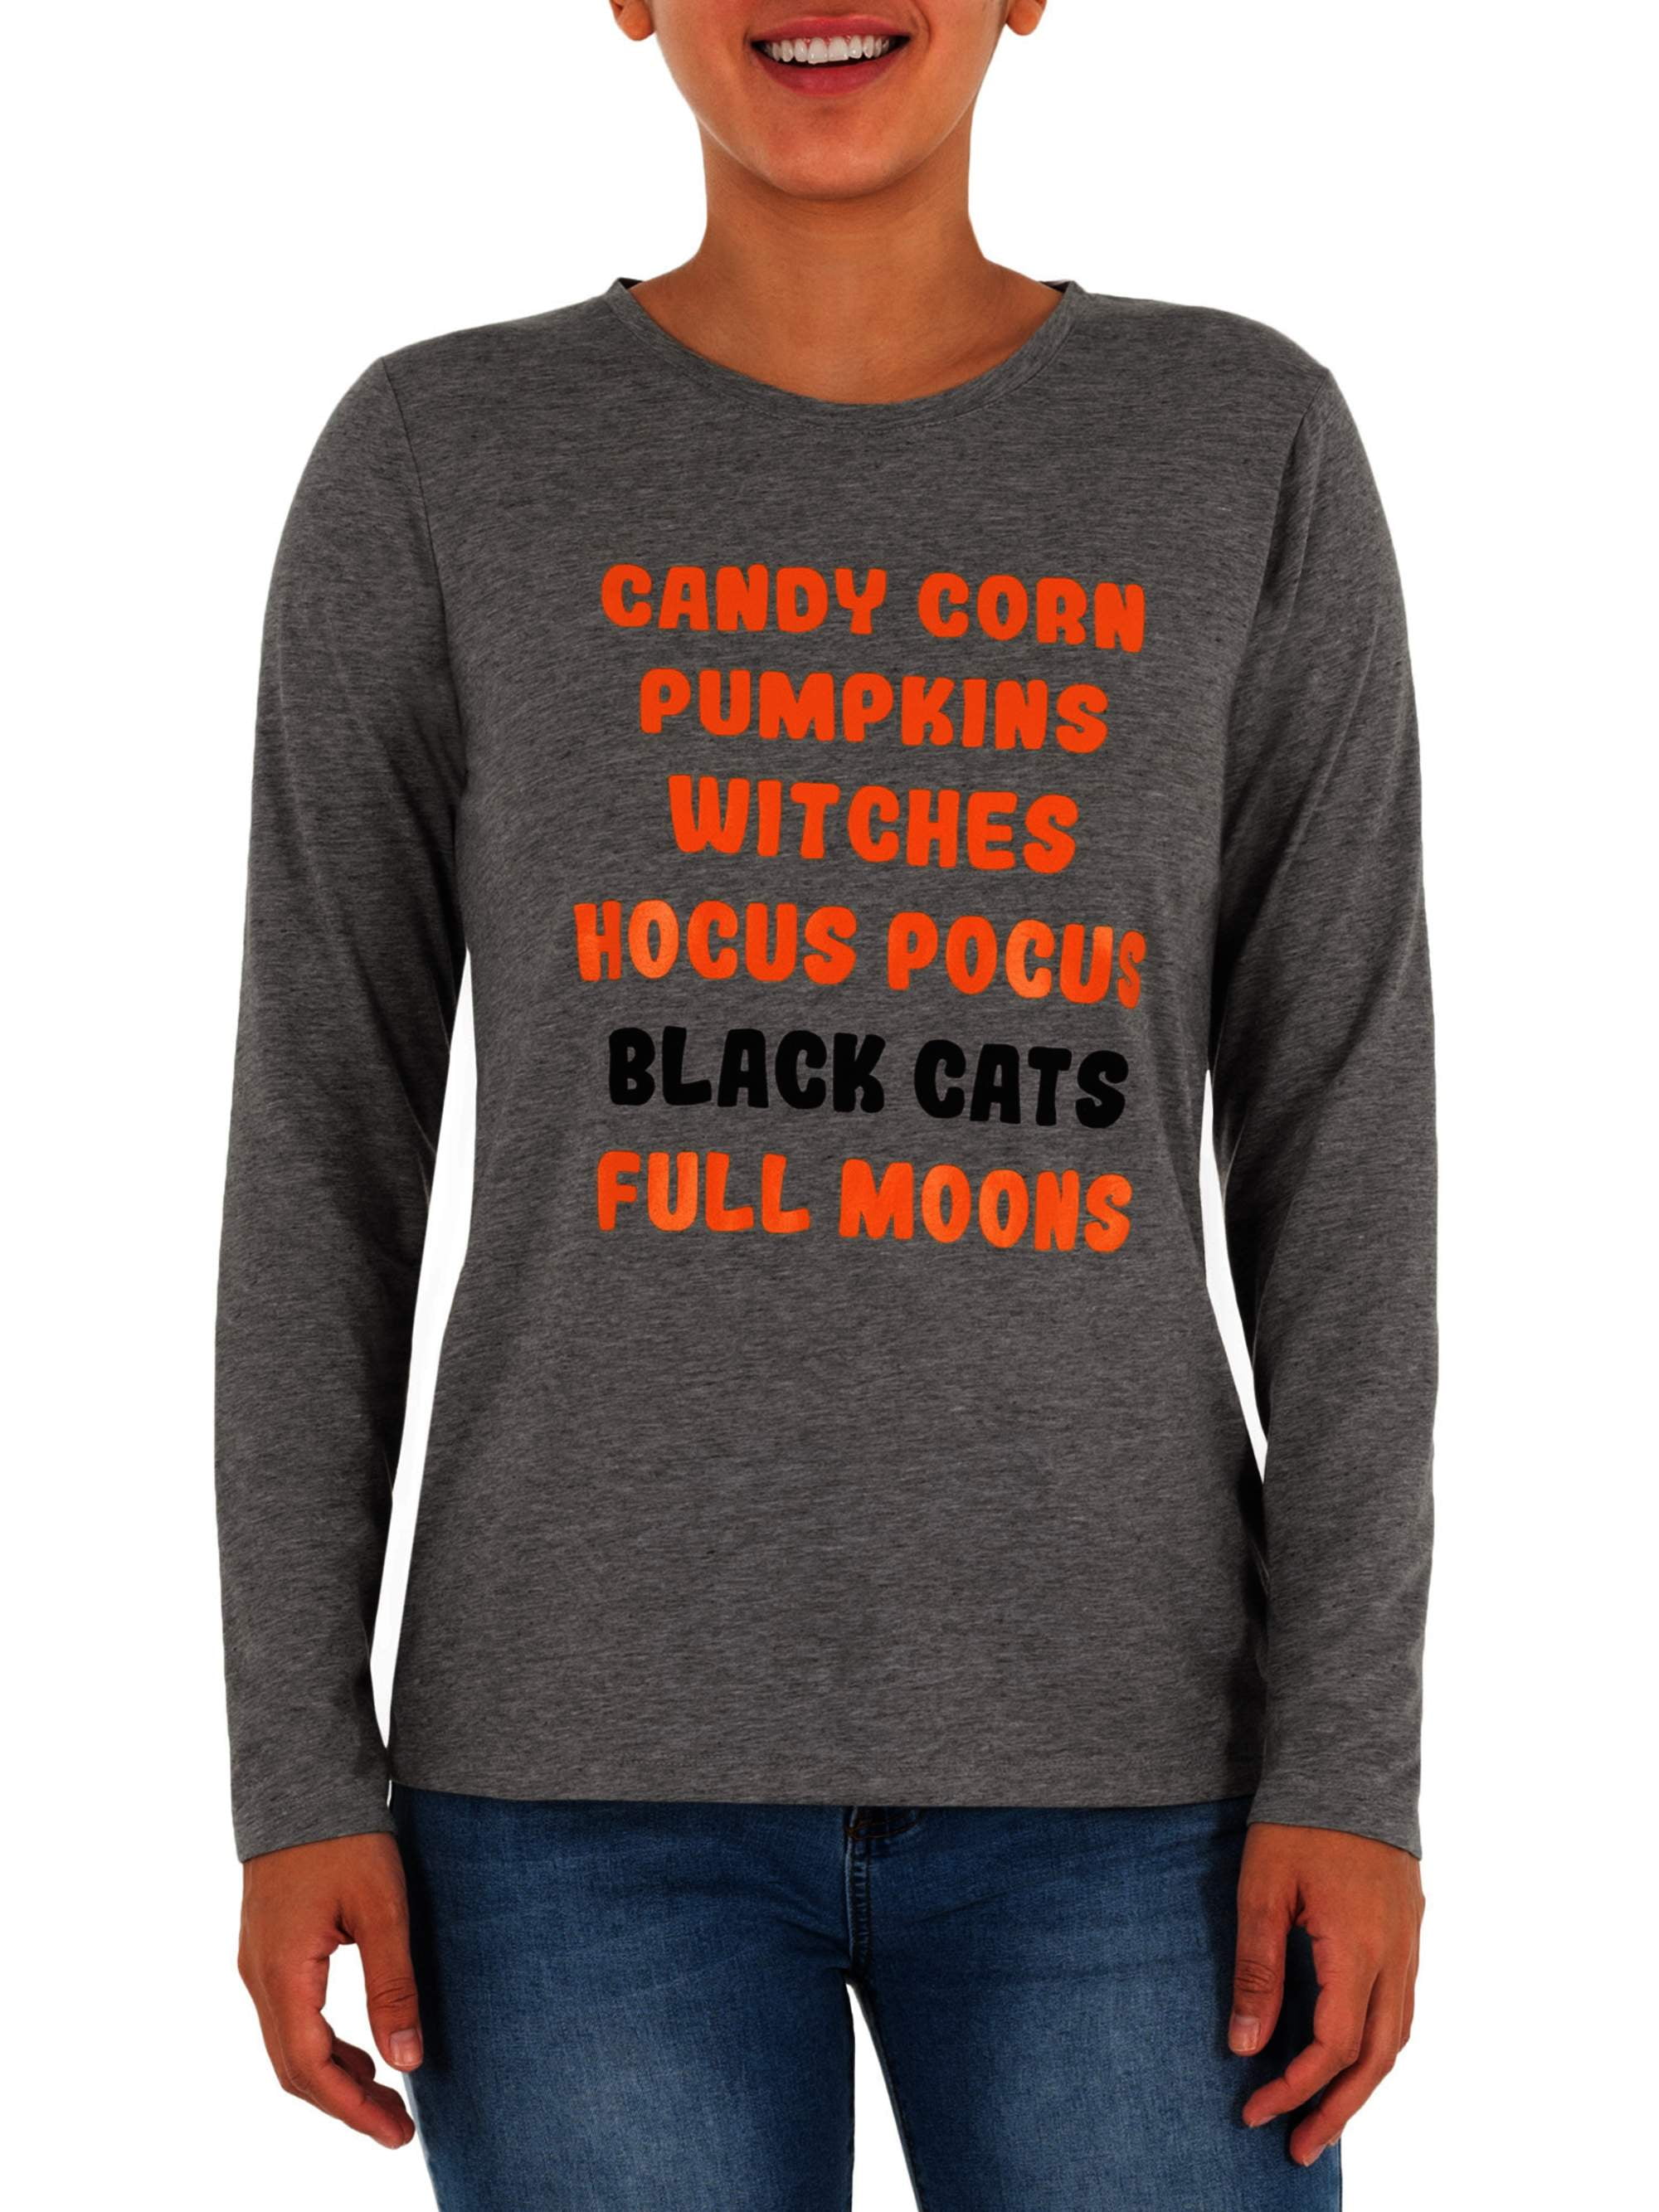 Hocus Pocus Sweatshirt for Women Halloween Shirts Long Sleeve Black Cat Shirt Halloween Pullovers Sweatshirts Casual Tops